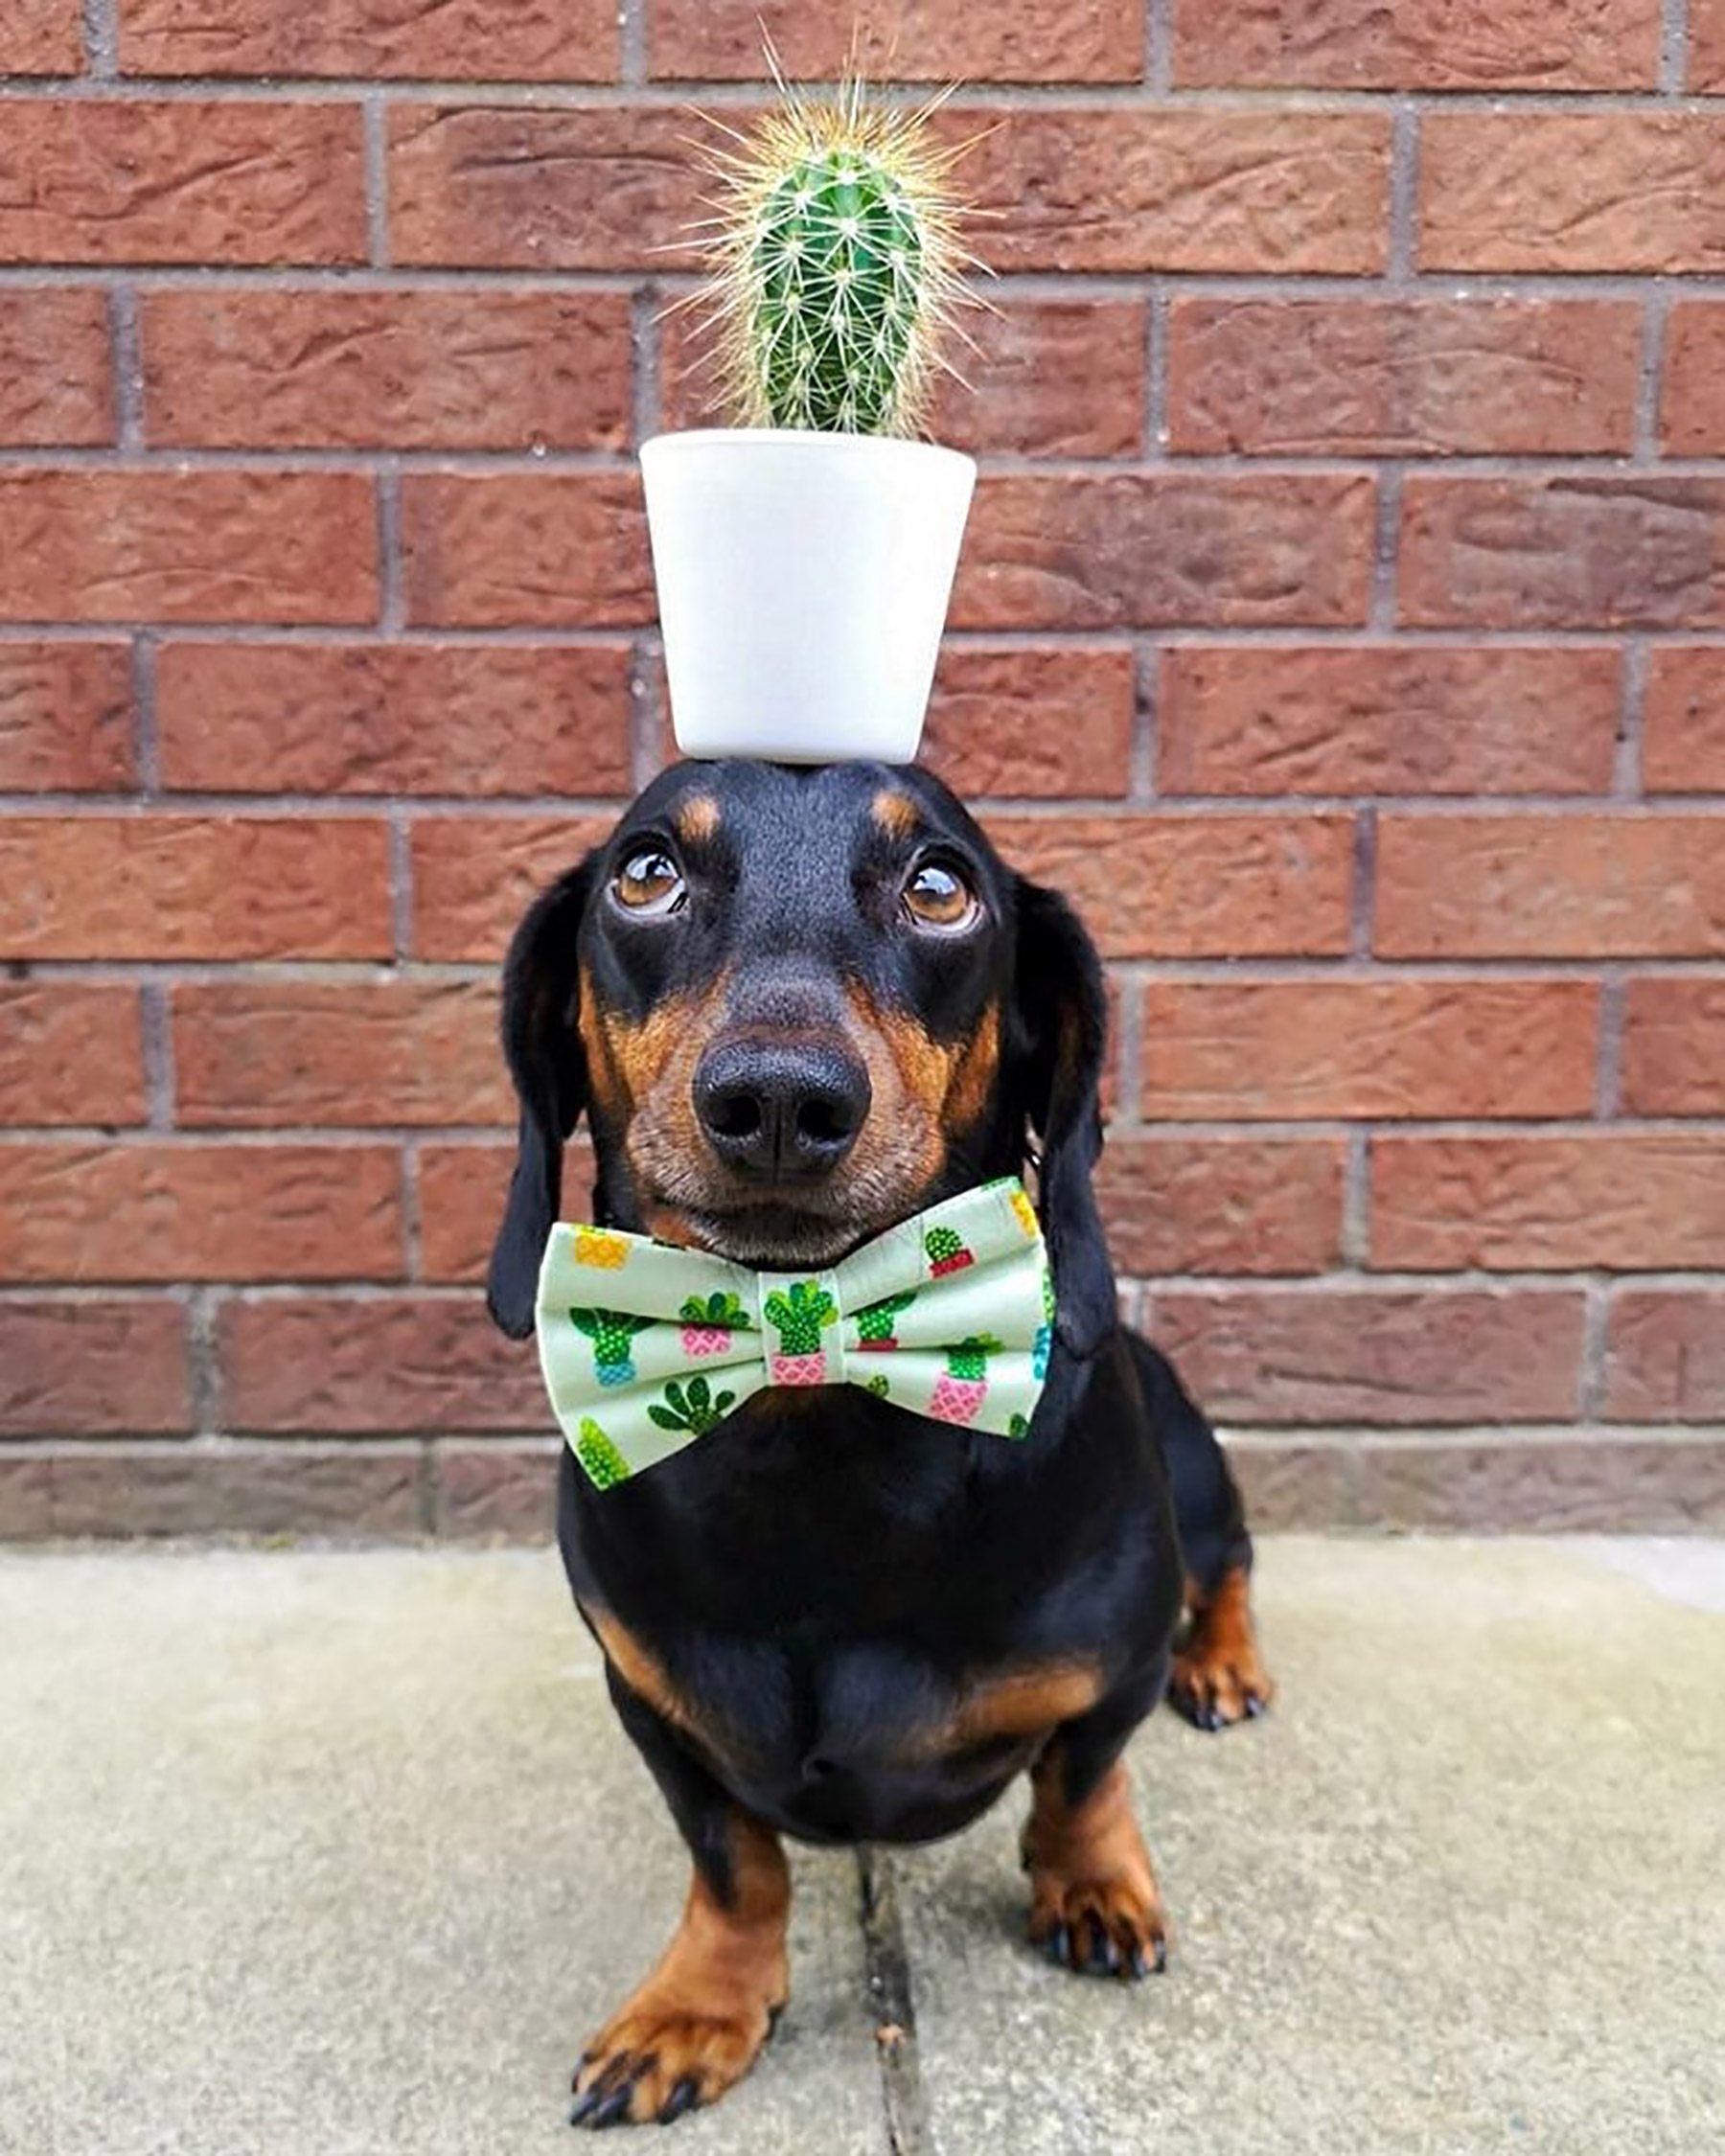 dog can balance items on his head